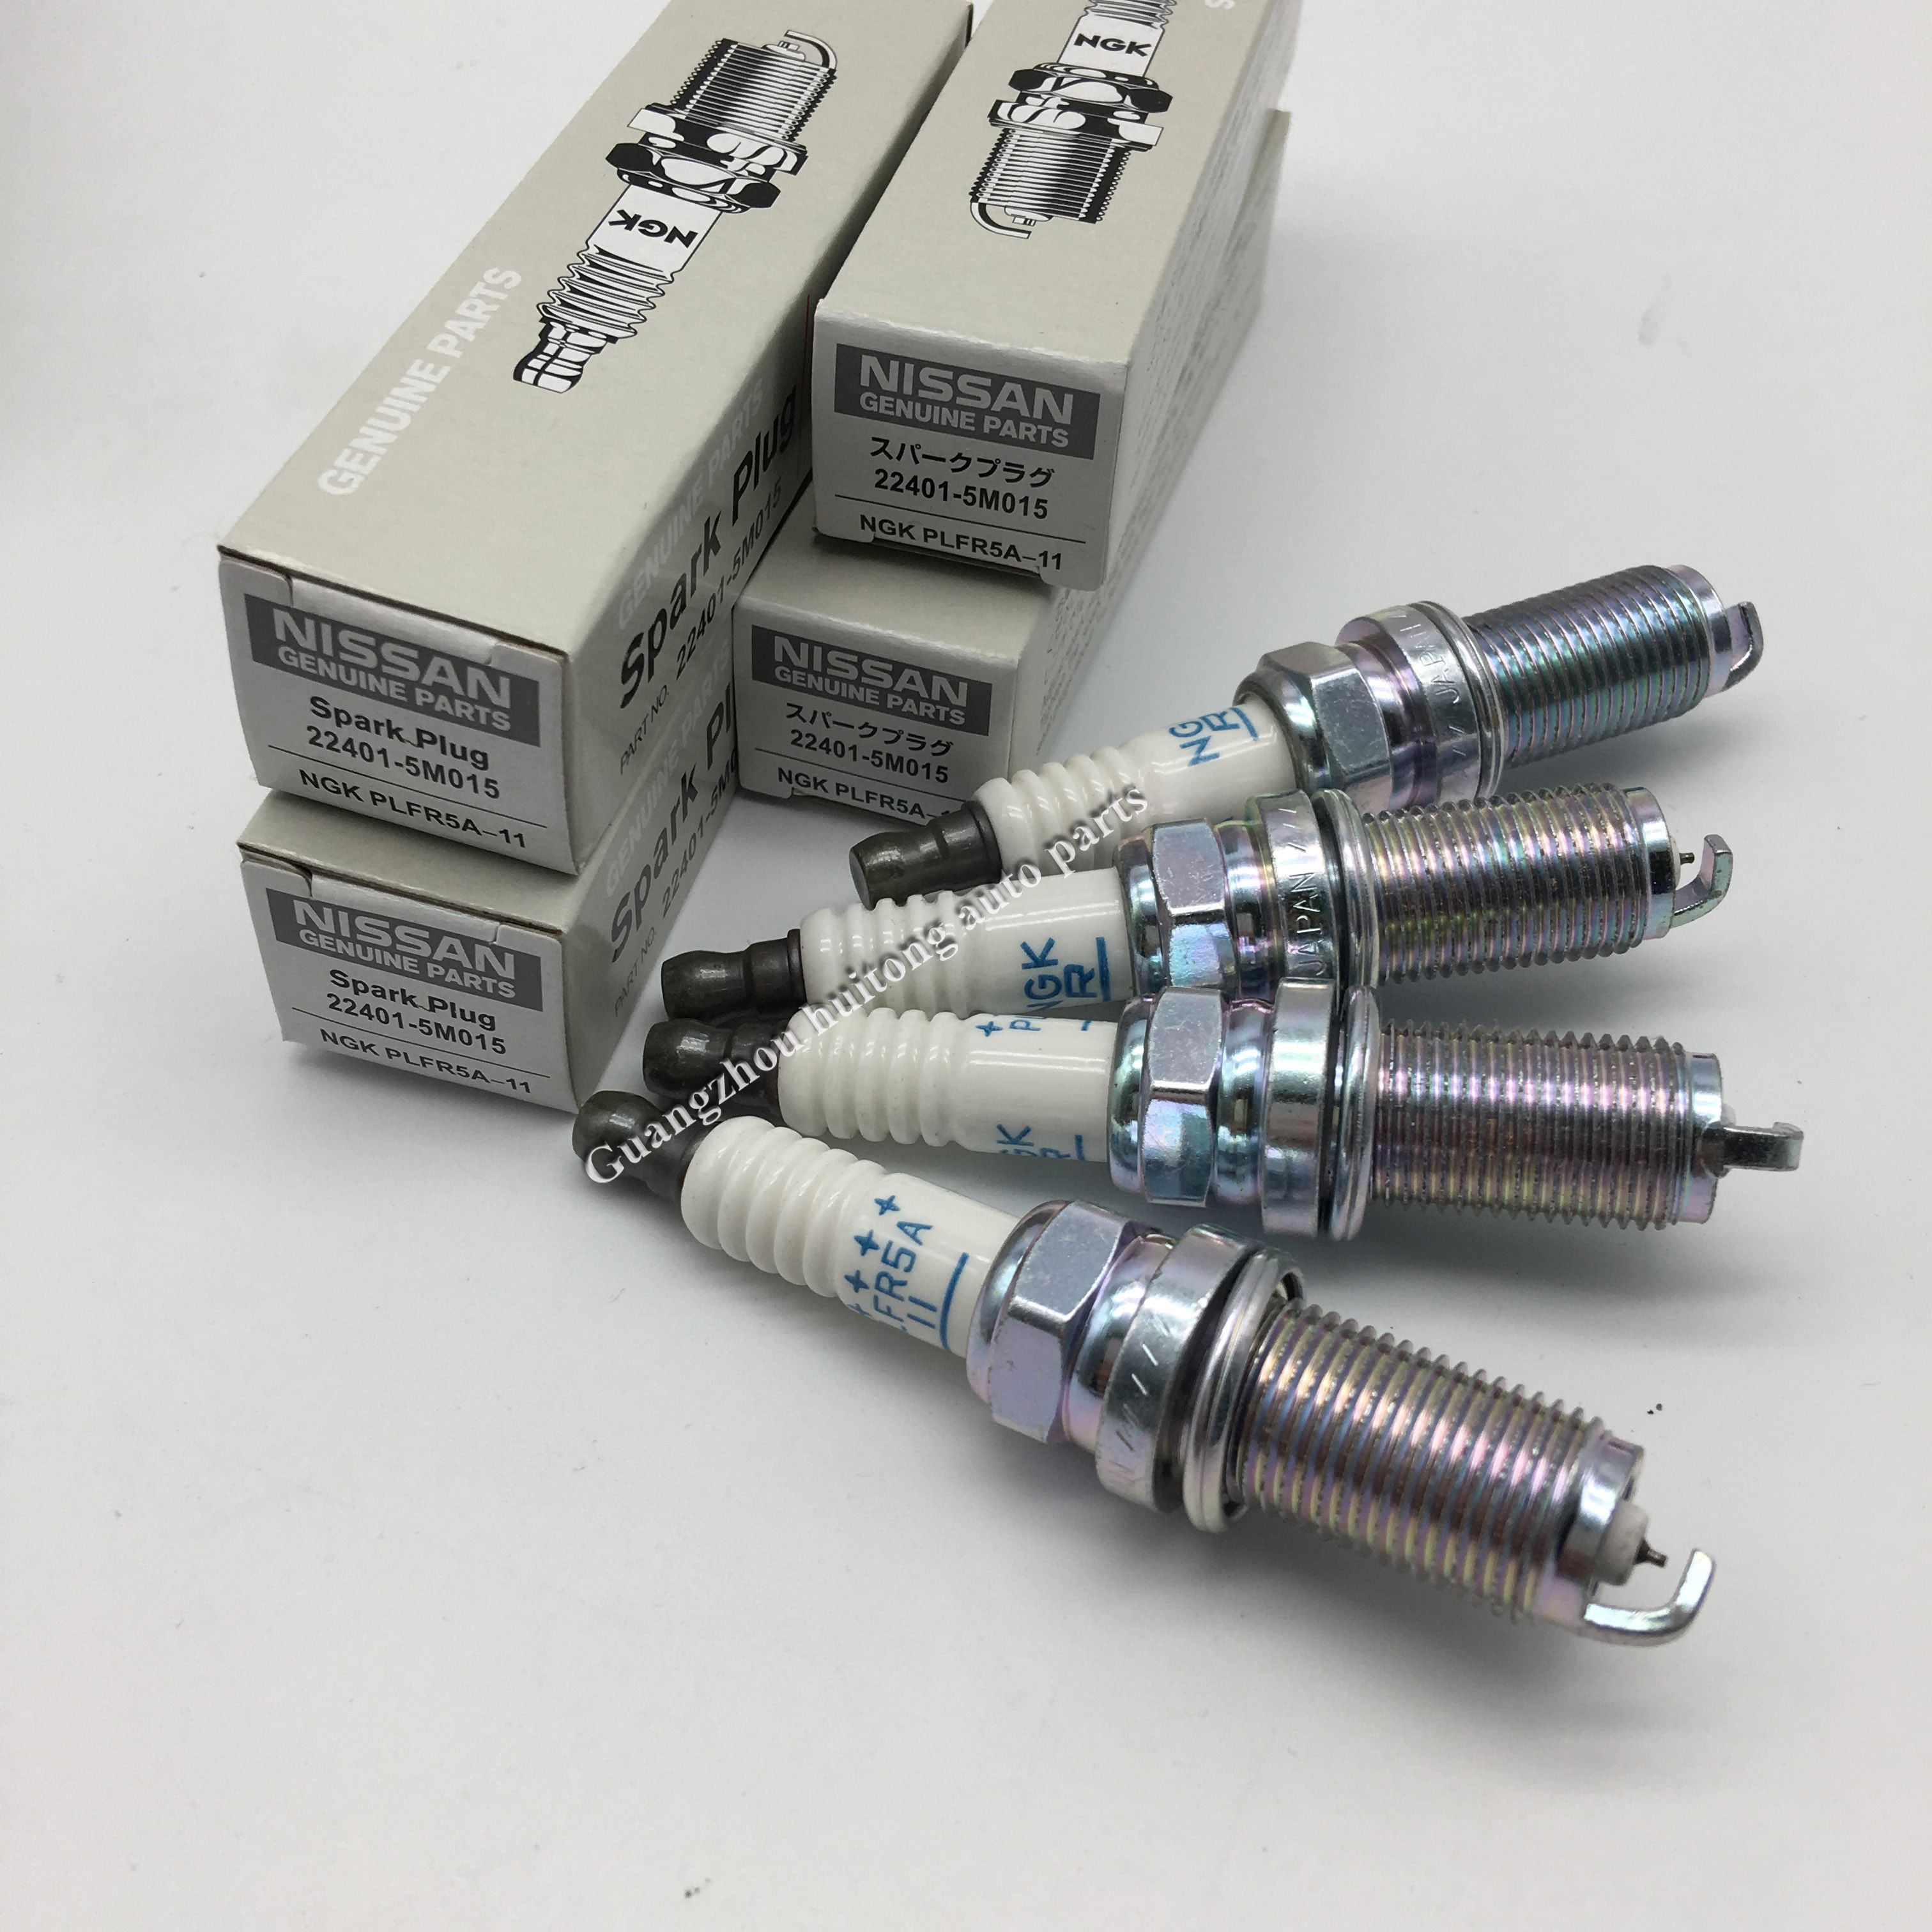 New 6pcs 22401-5M015 Iridium Spark Plugs for NISSAN PLFR5A11 VQ35DE USA Shipping